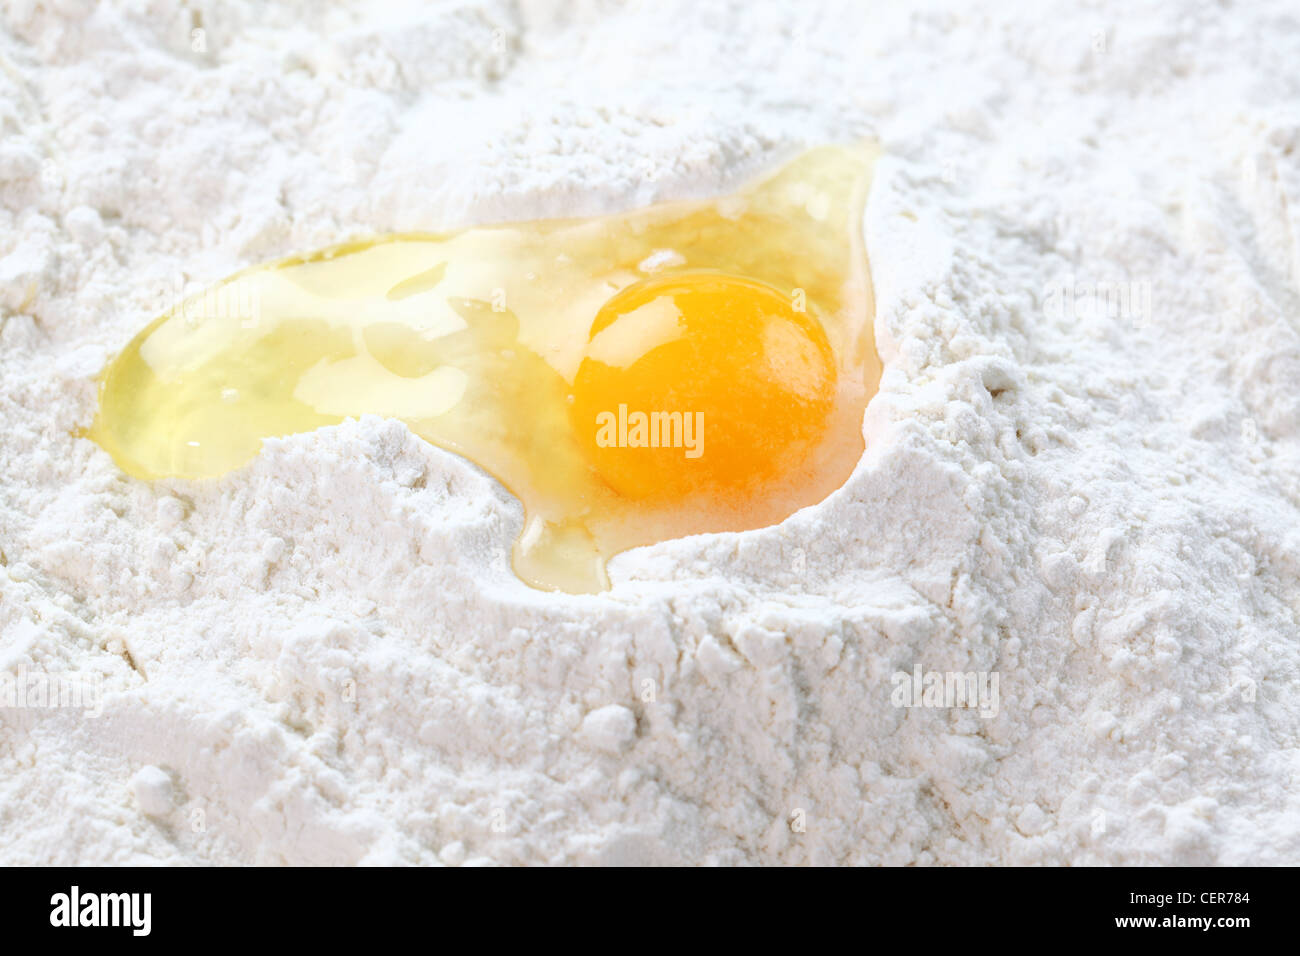 Baking ingredient - flour and egg Stock Photo